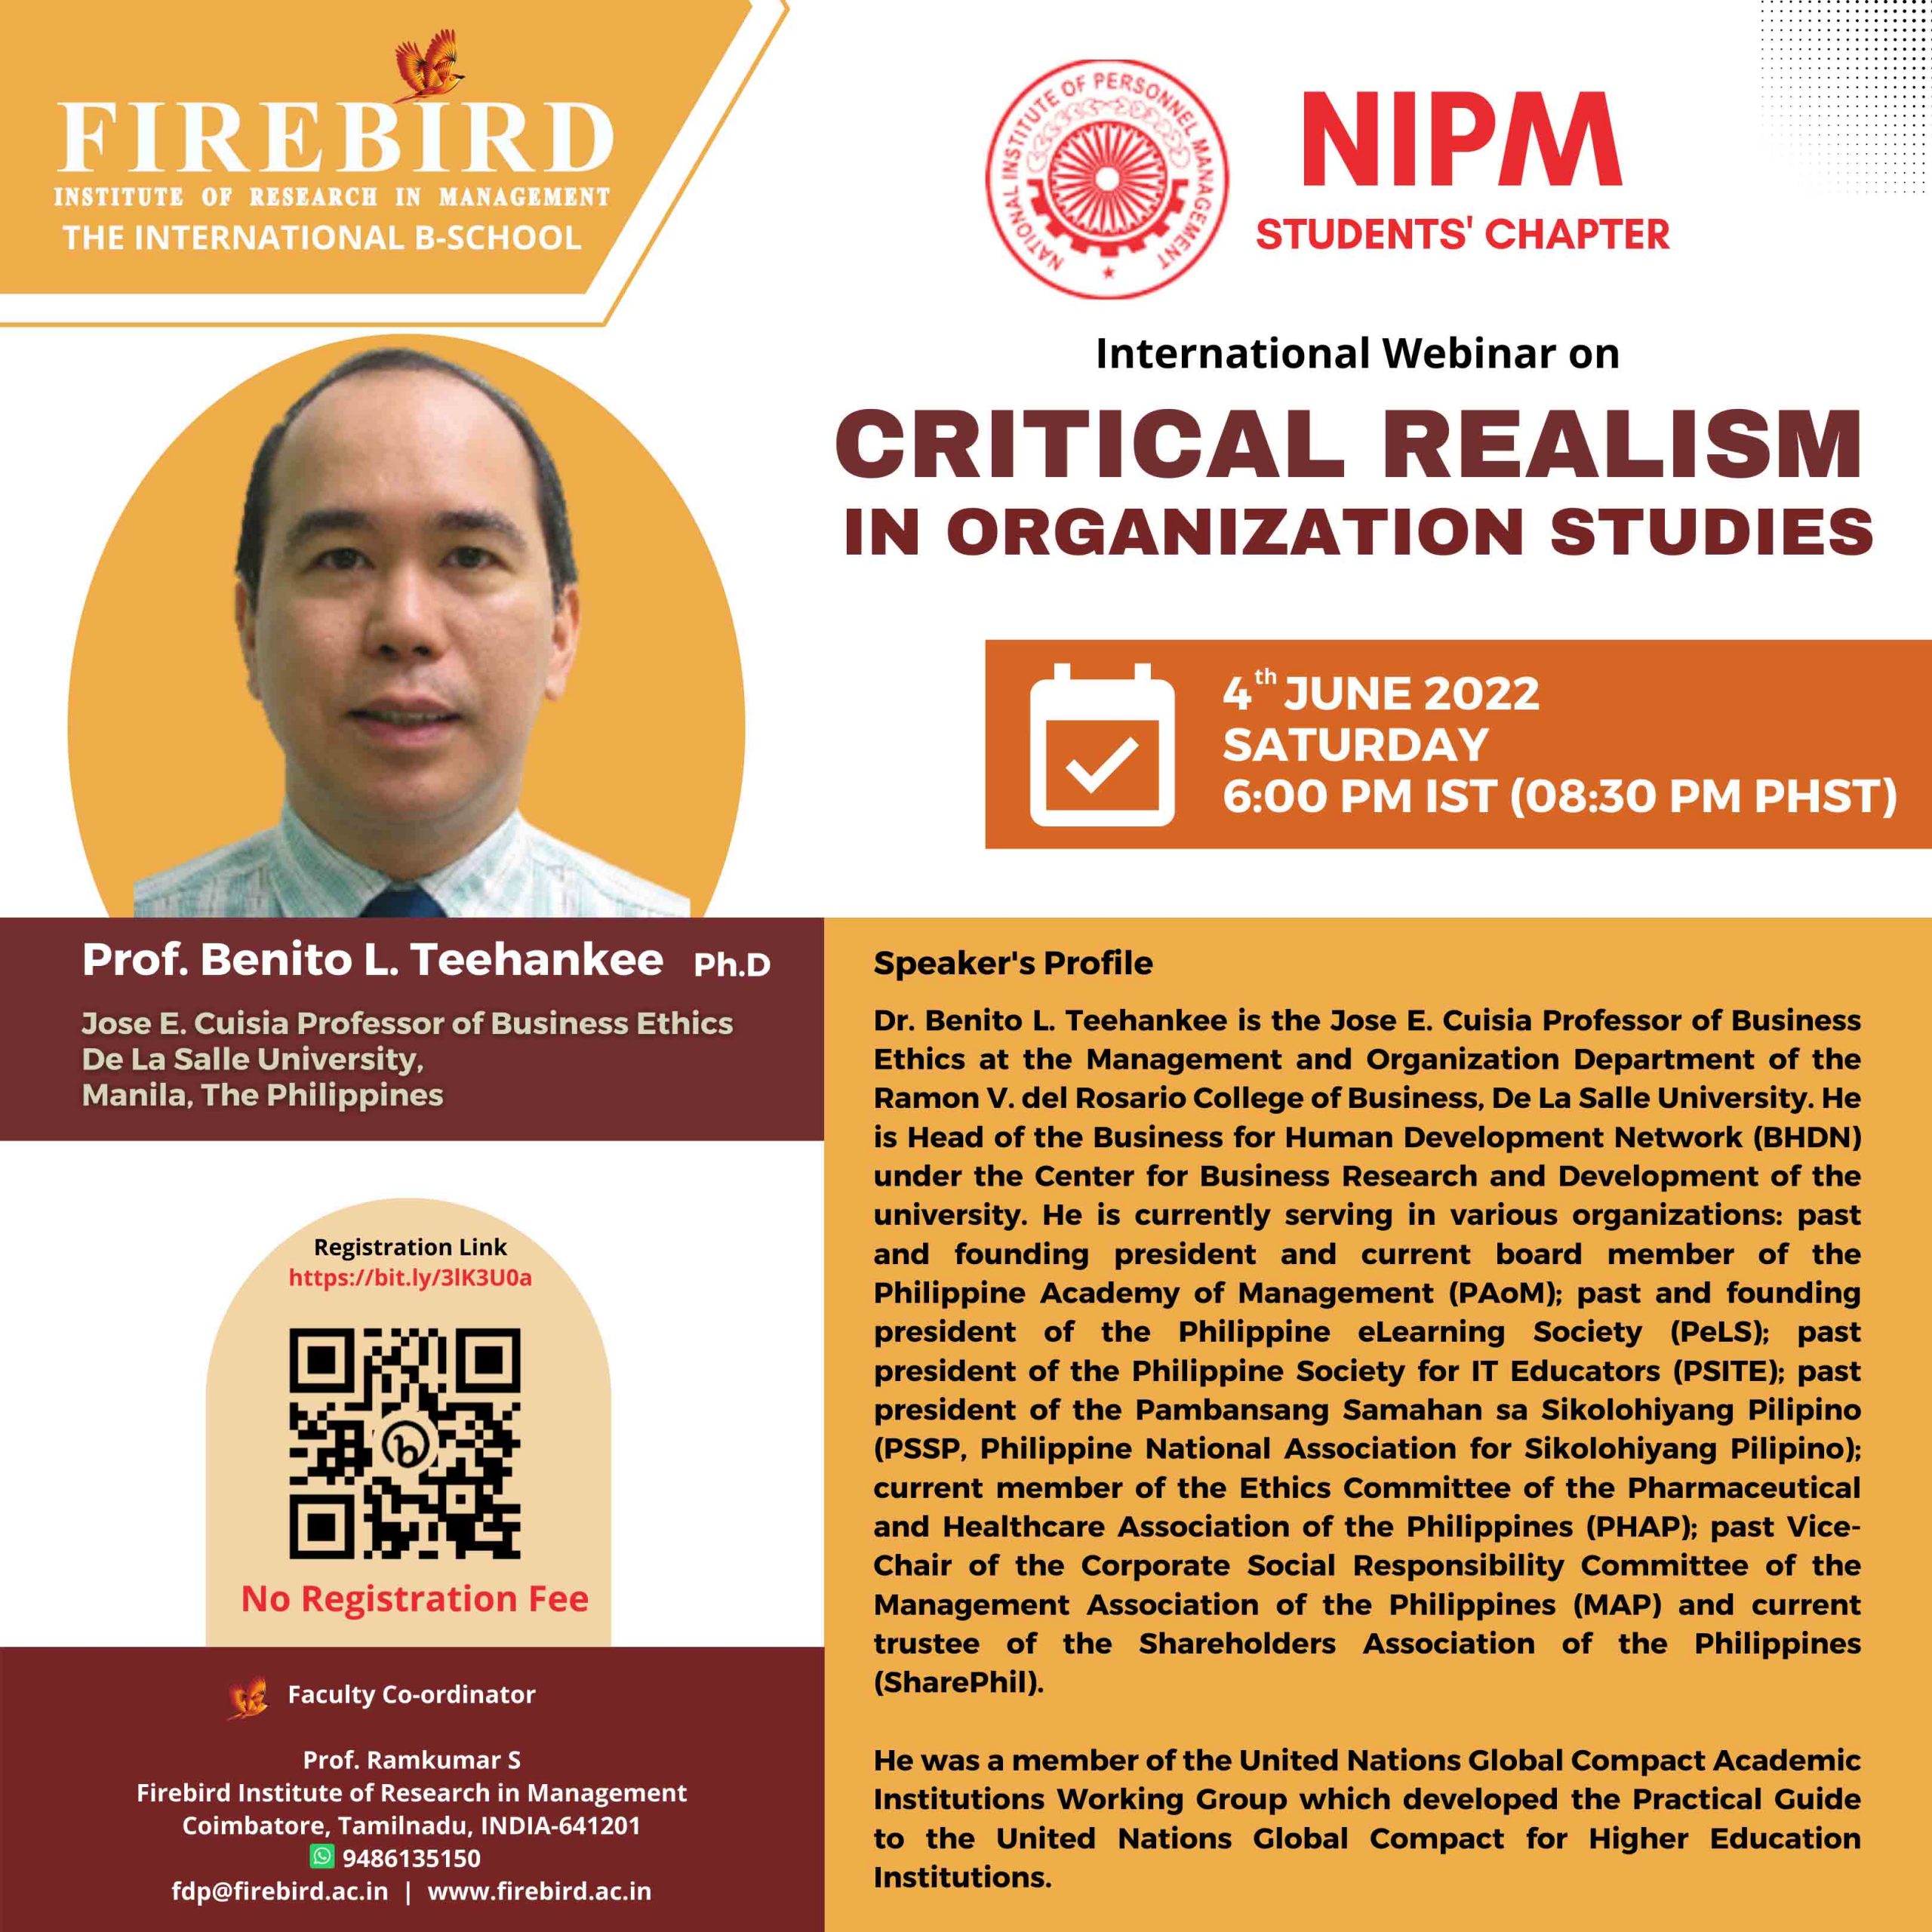 NIPM Students Chapter International Webinar on Critical Realism in Organization Studies 4th June 2022